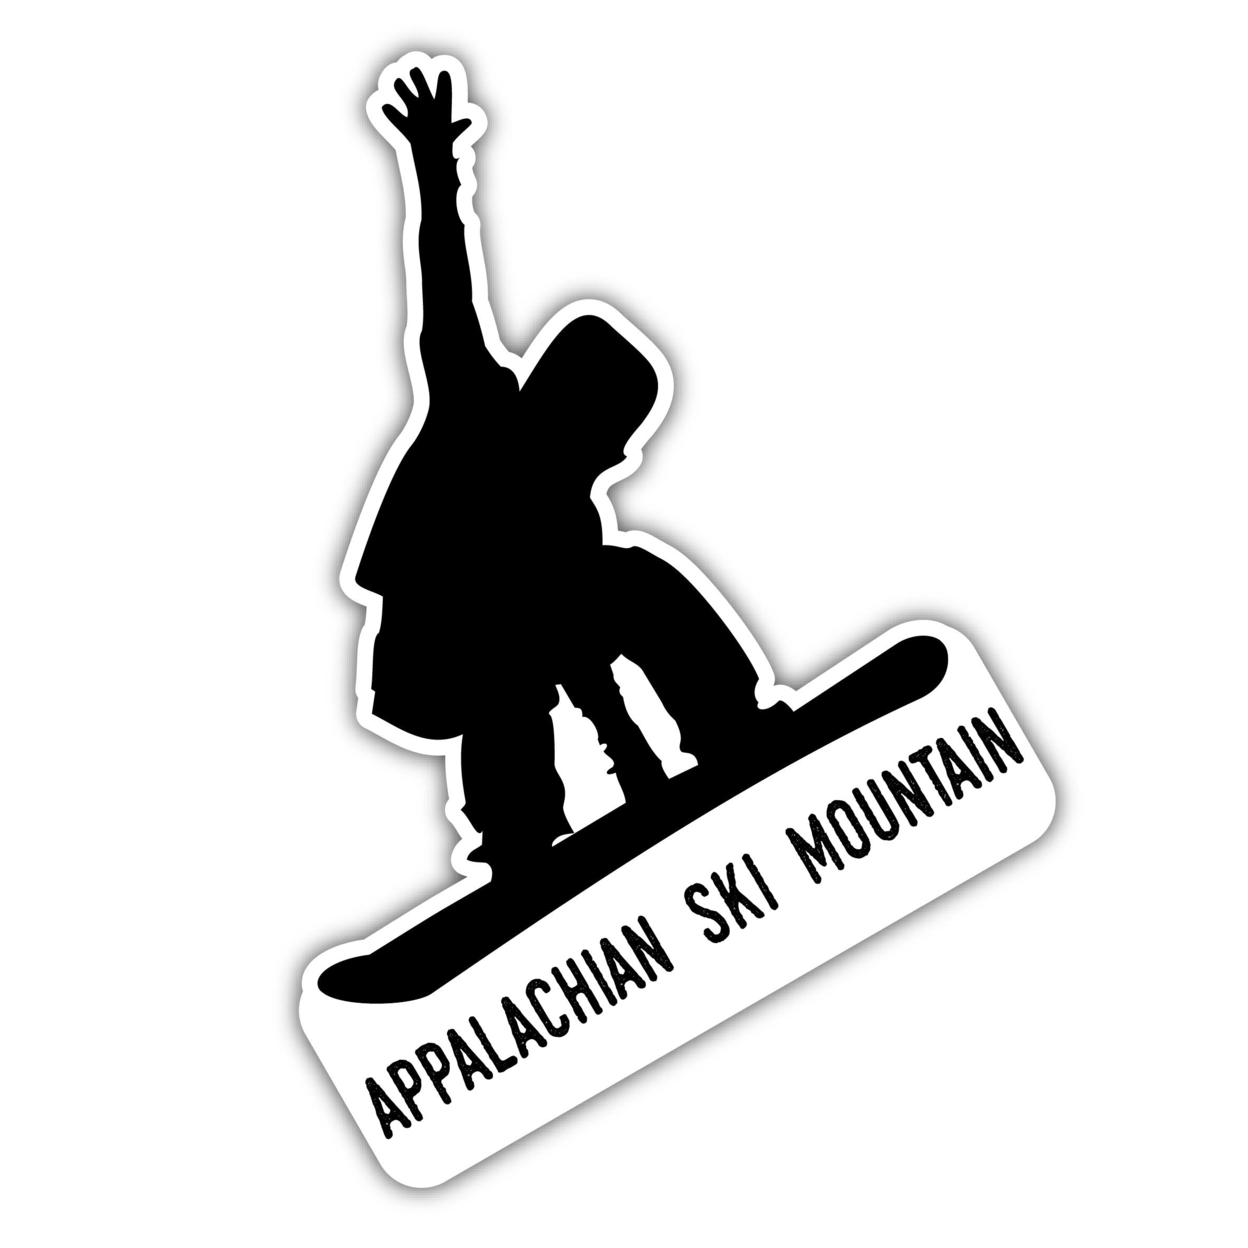 Appalachian Ski Mountain North Carolina Ski Adventures Souvenir Approximately 5 X 2.5-Inch Vinyl Decal Sticker Goggle Design